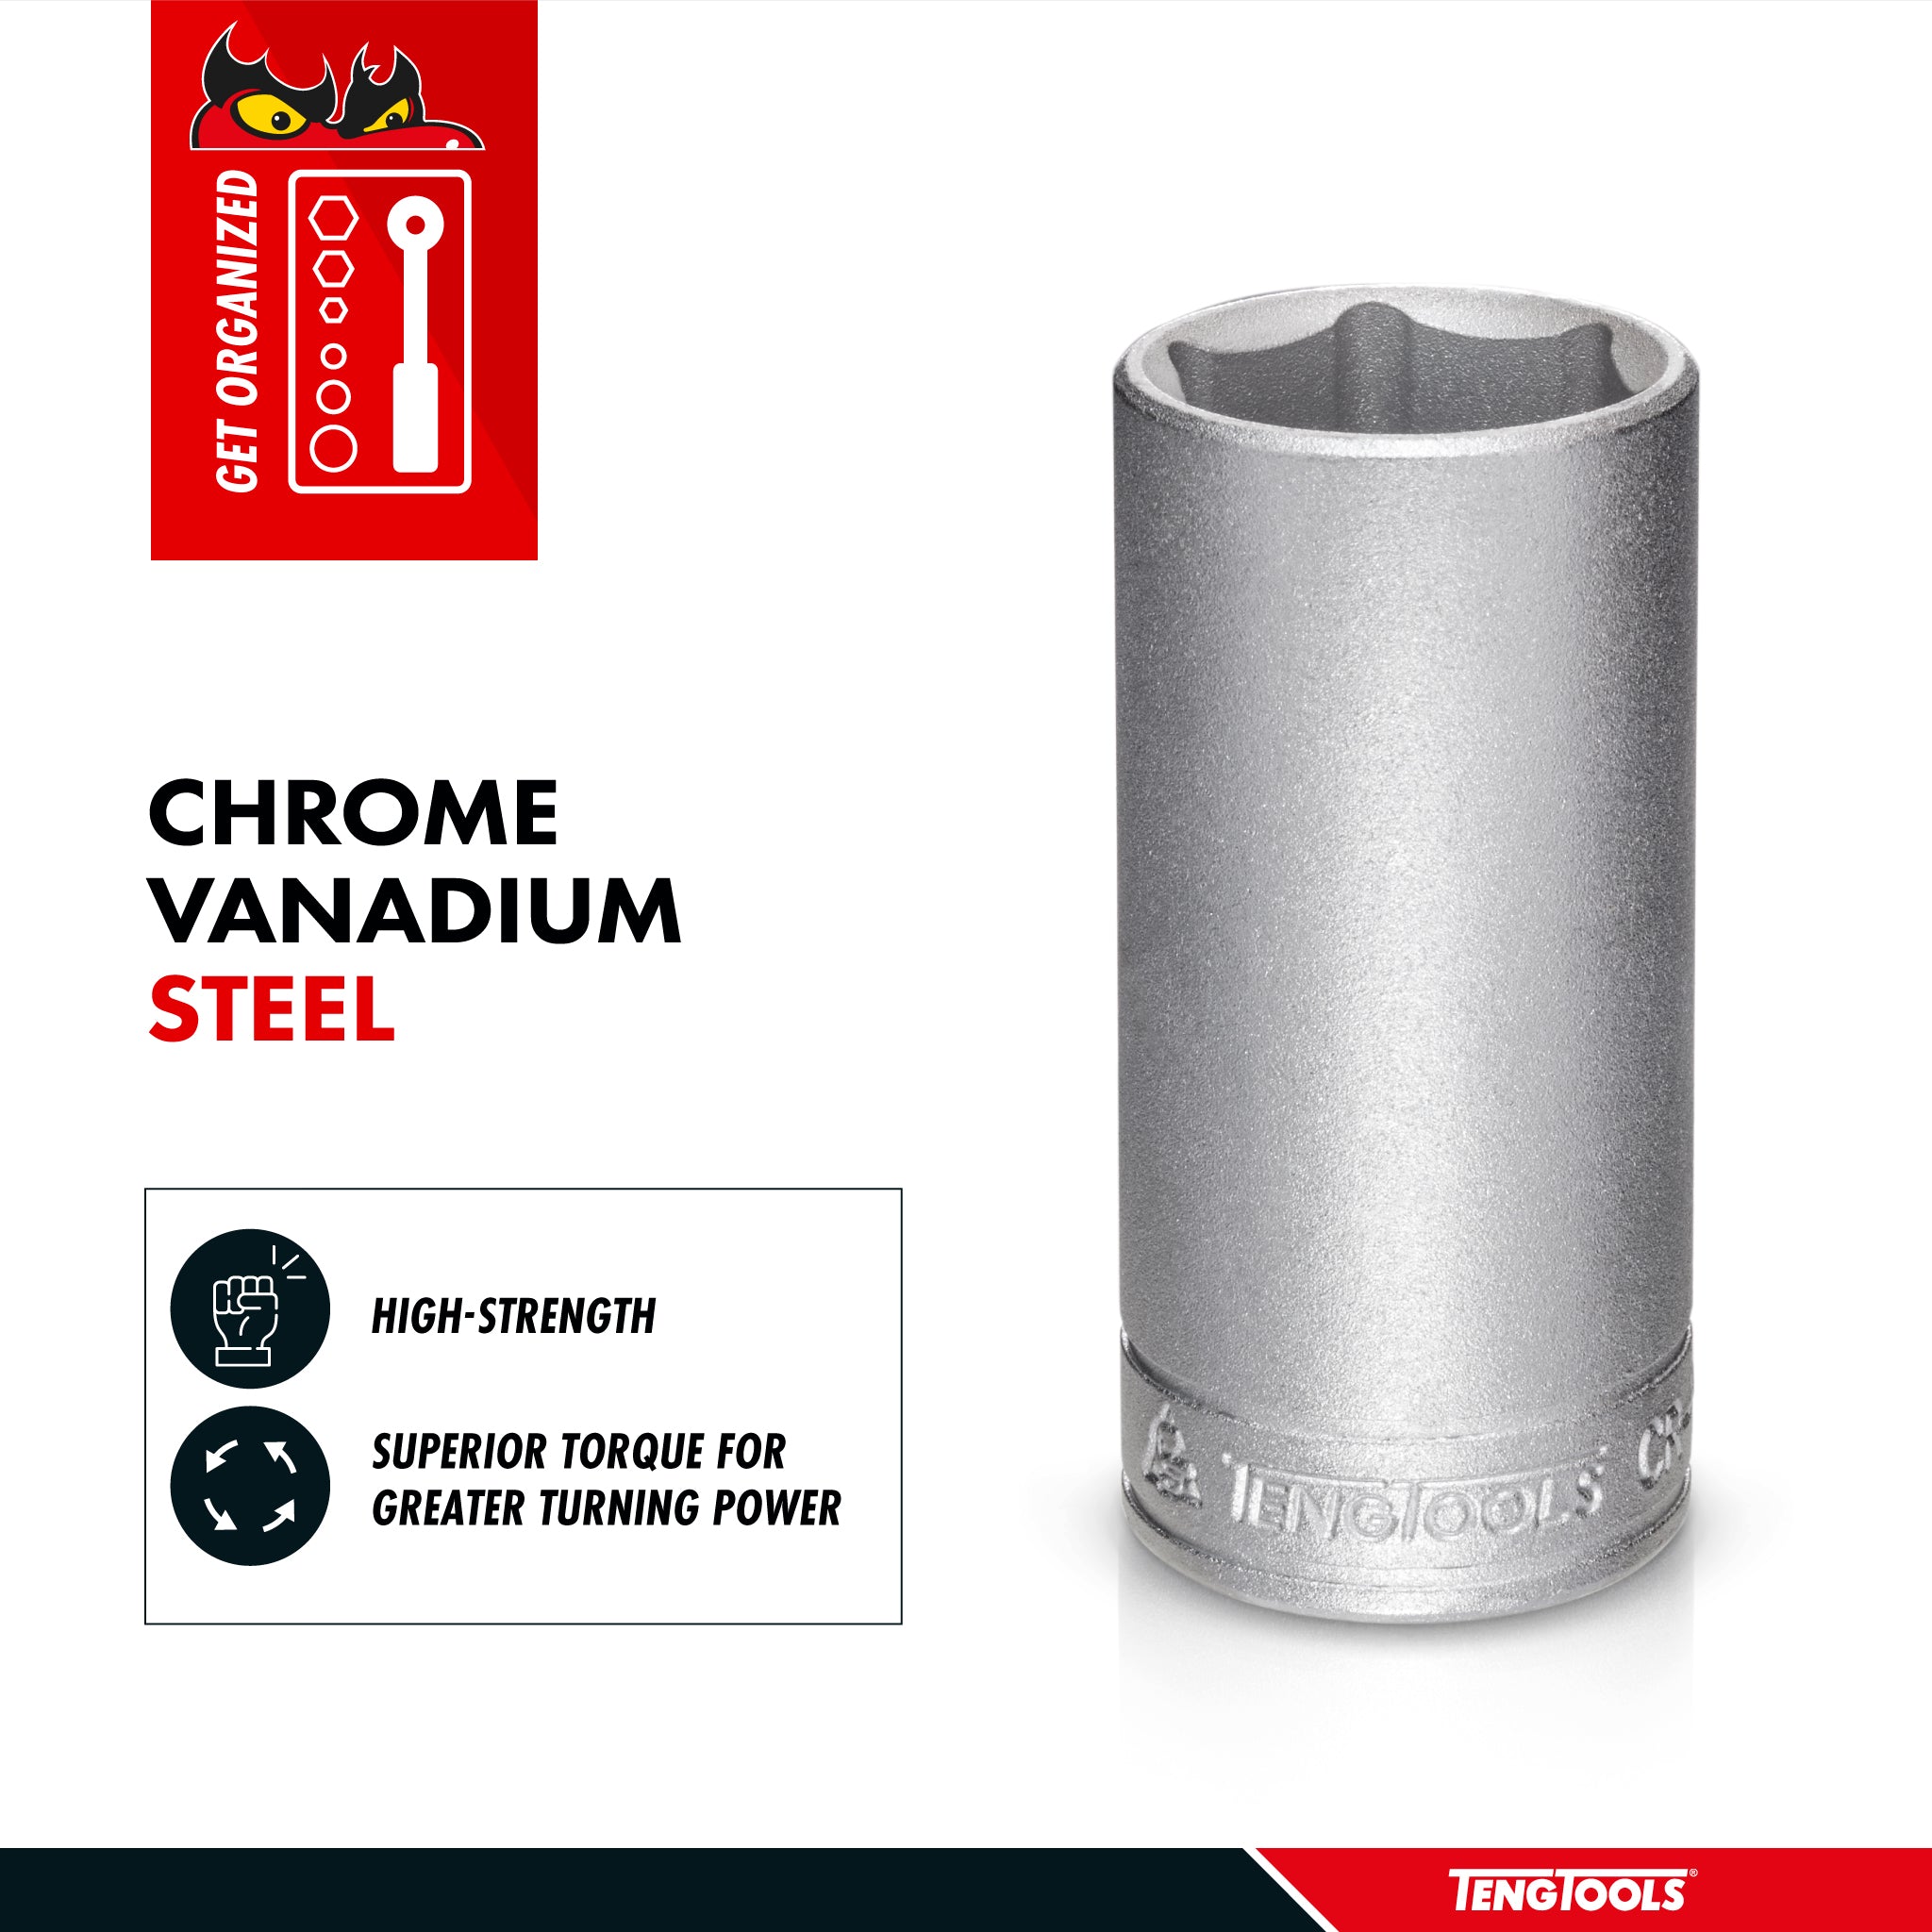 Teng Tools 6 Point SAE Deep 1/4 Inch Drive Chrome Vanadium Sockets